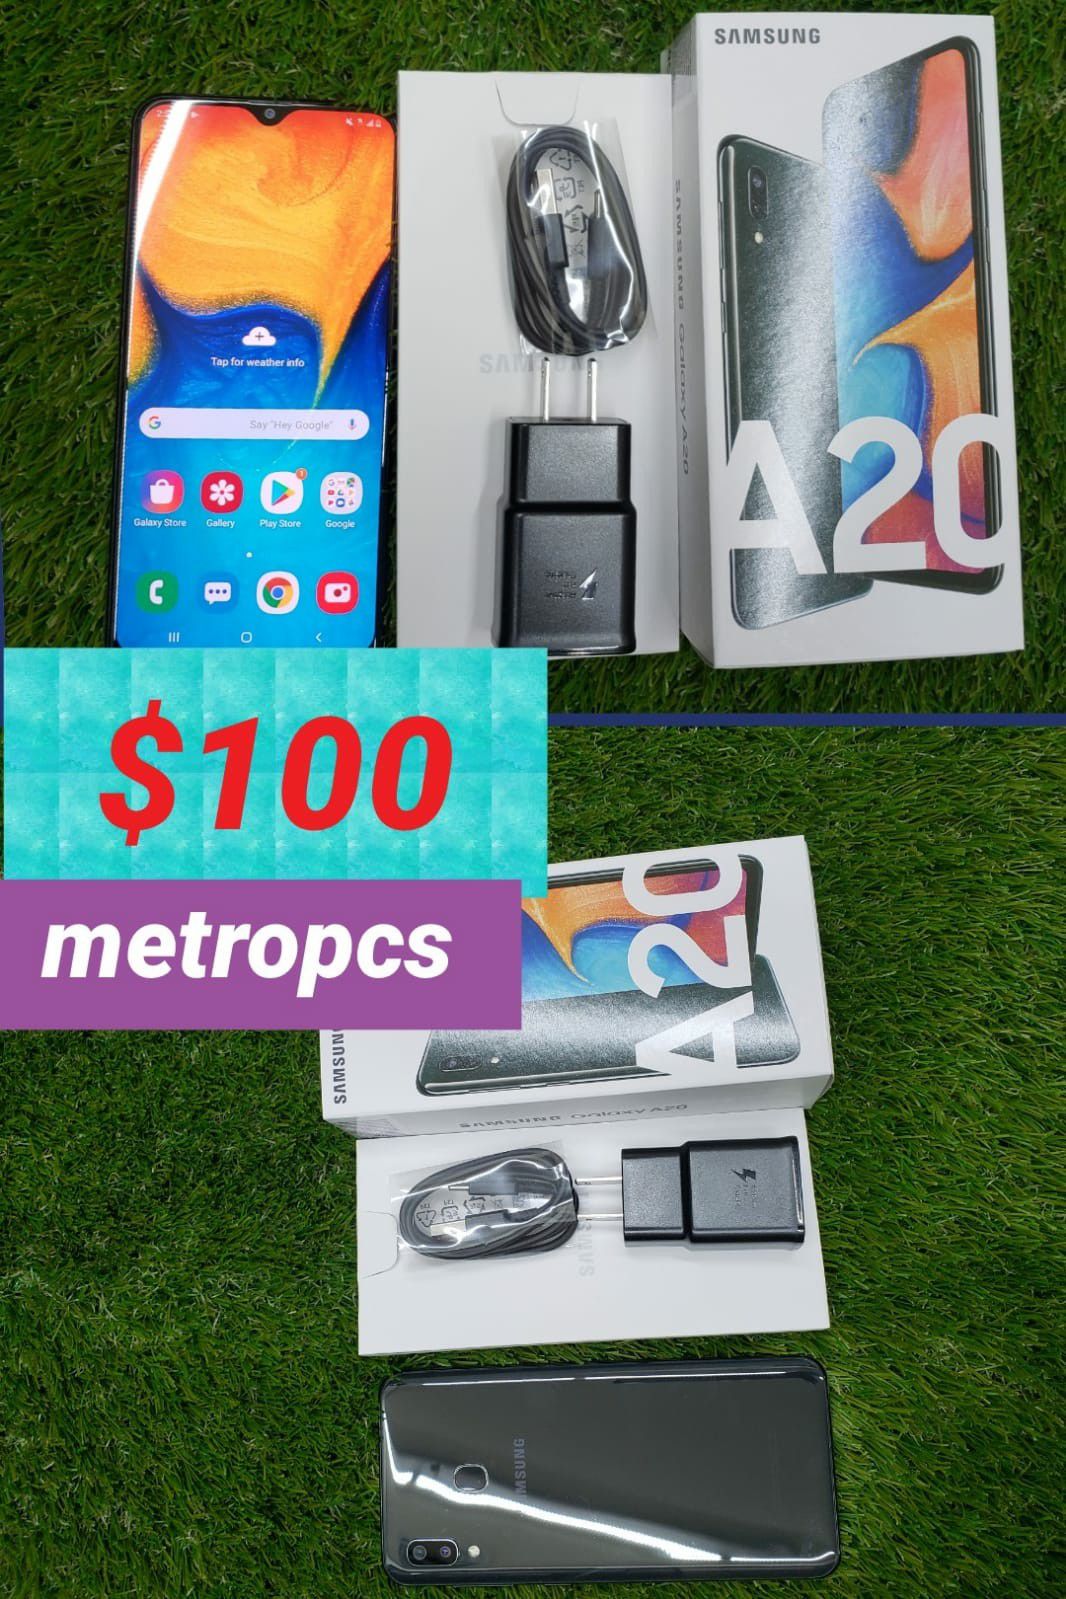 Samsung Galaxy A20 32GB Metropcs Brand New open box